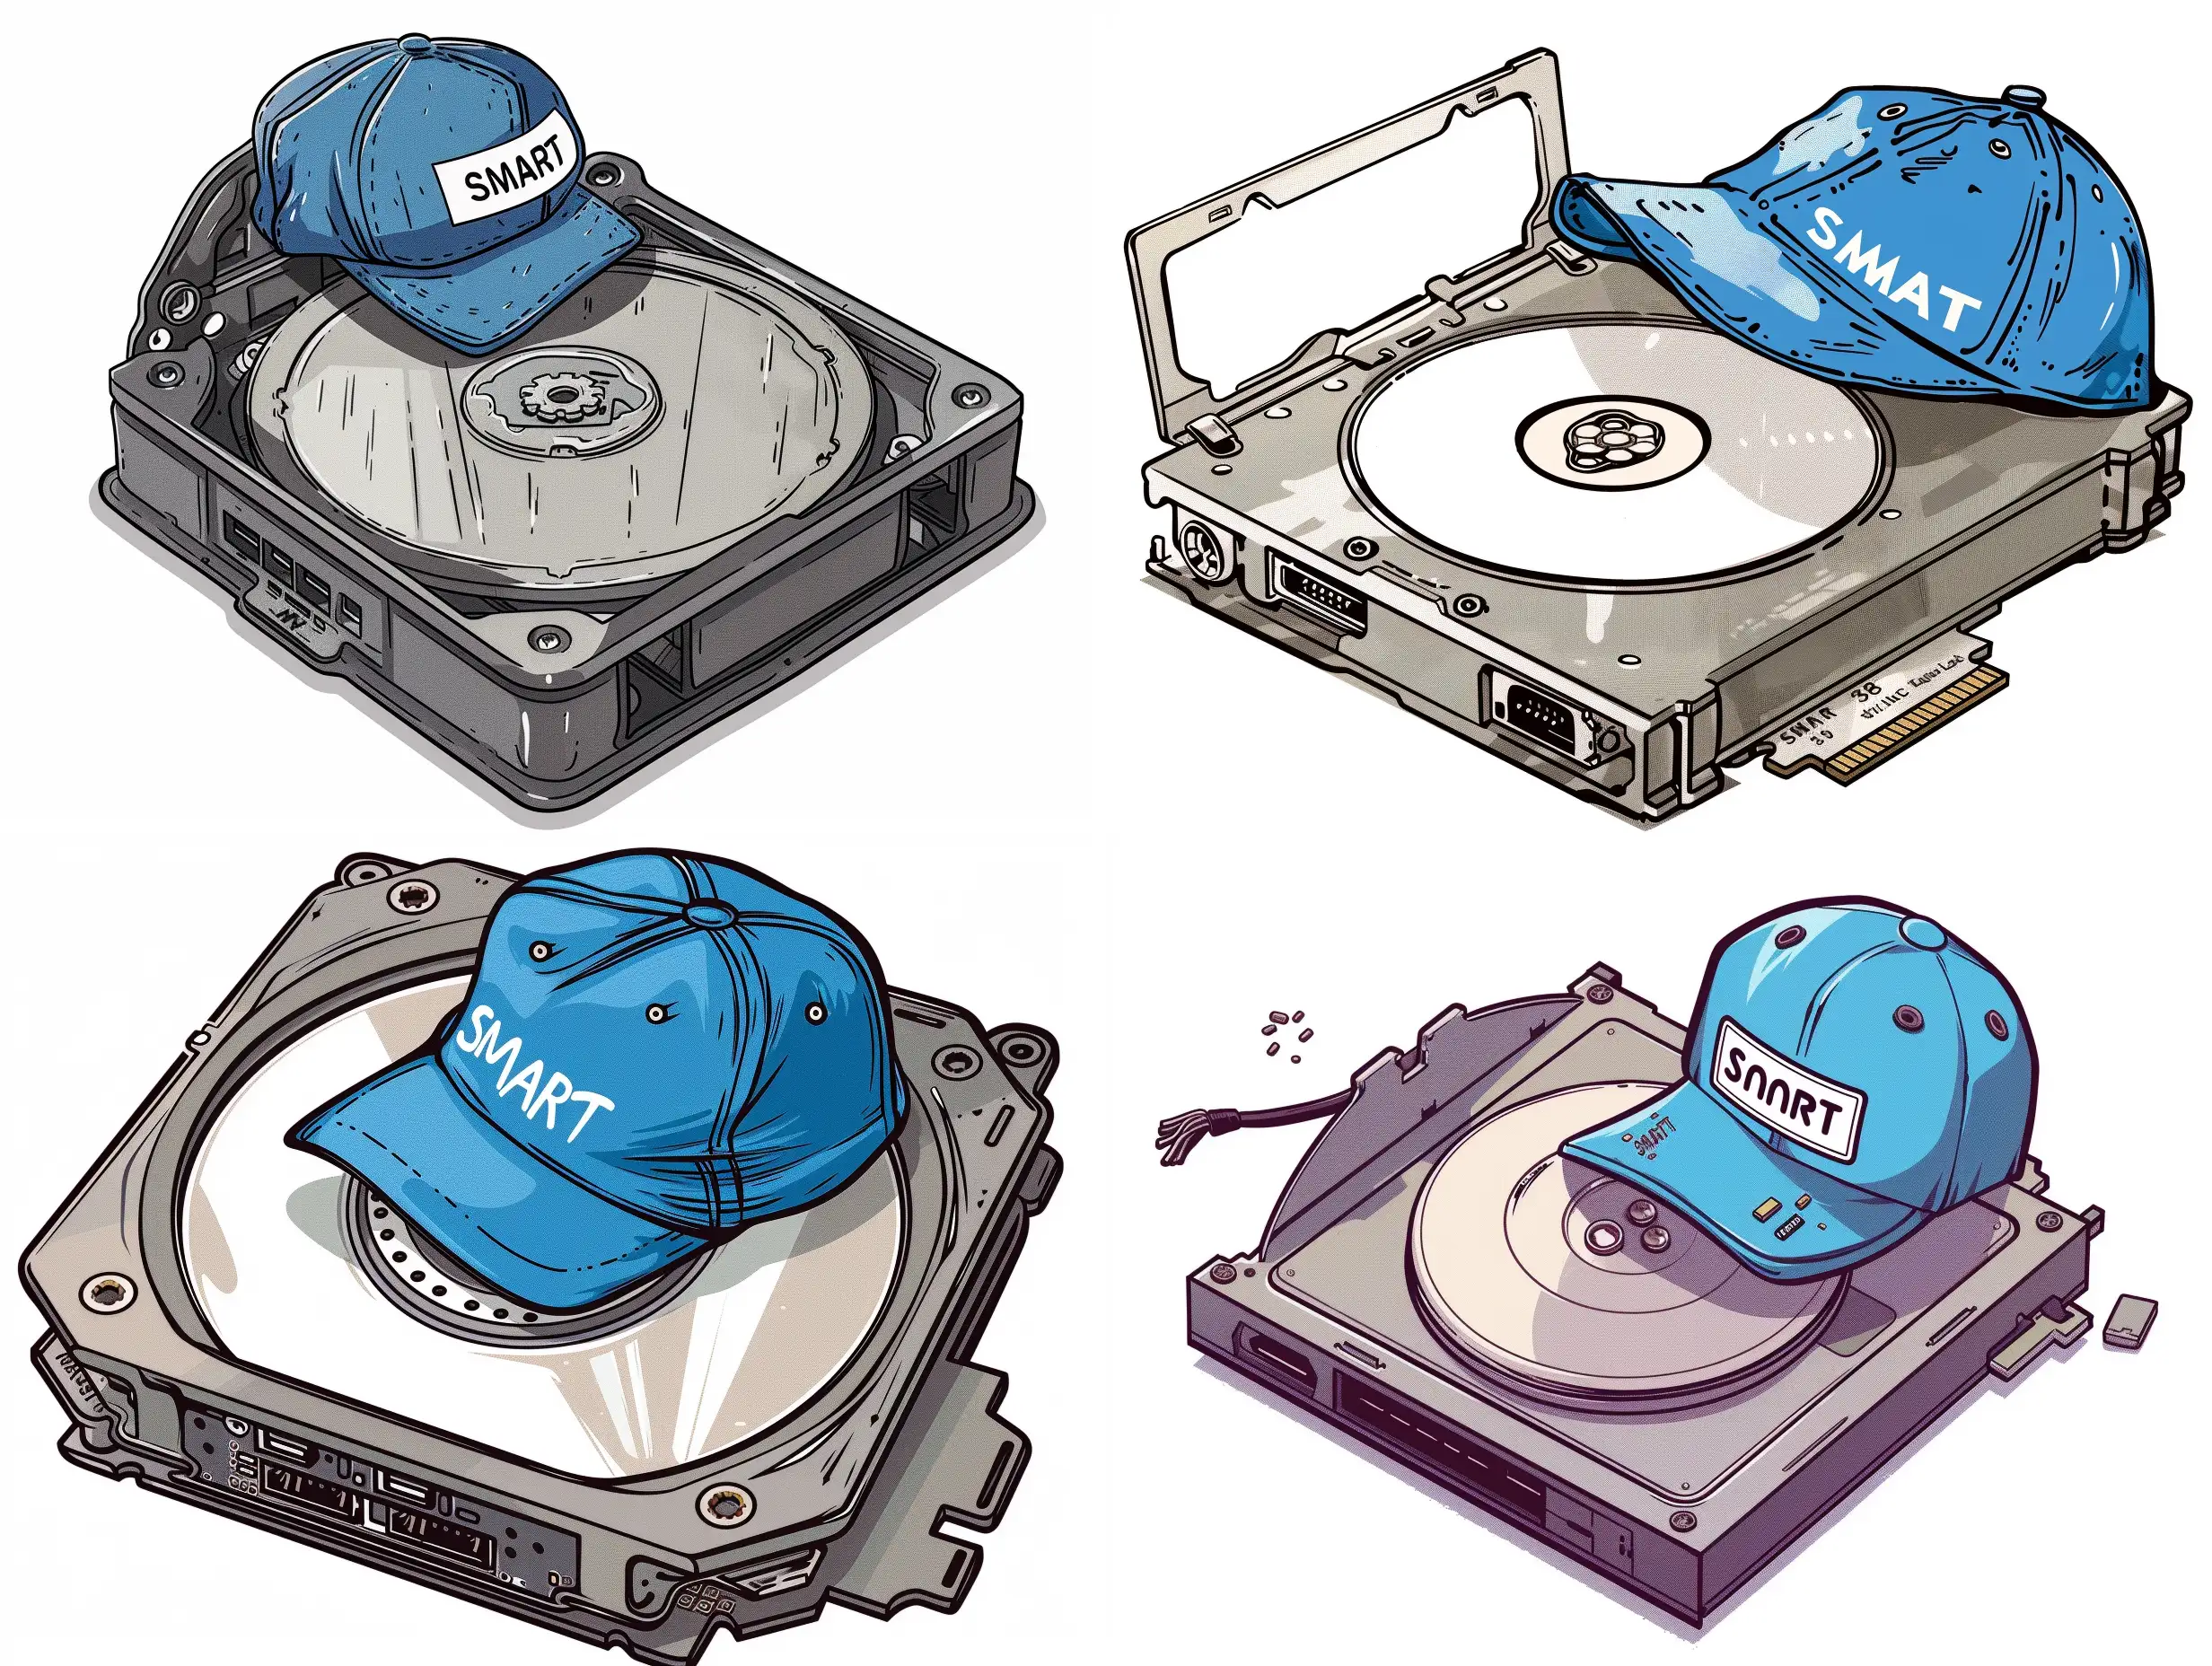 Smart-Desktop-Computer-Hard-Drive-with-Blue-Cap-Cartoon-Illustration